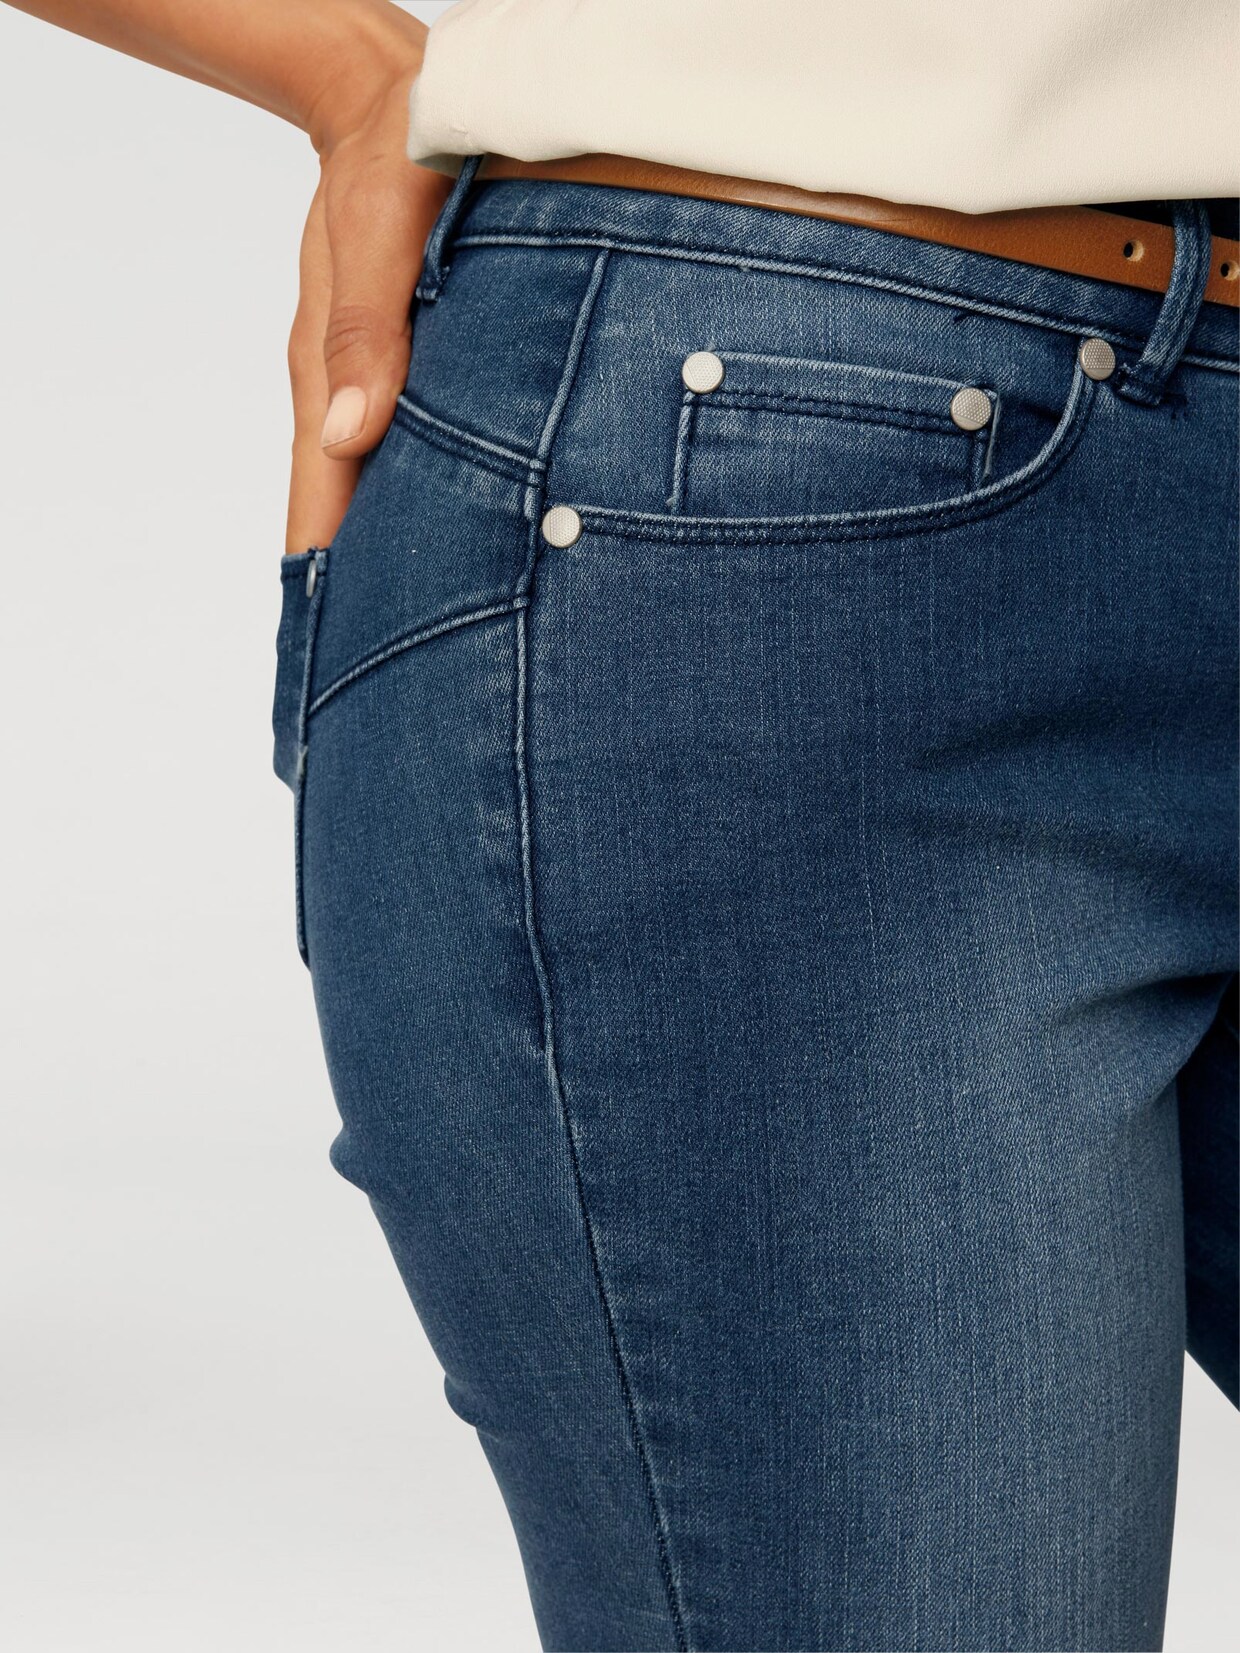 Linea Tesini jeans effet ventre plat - bleu denim